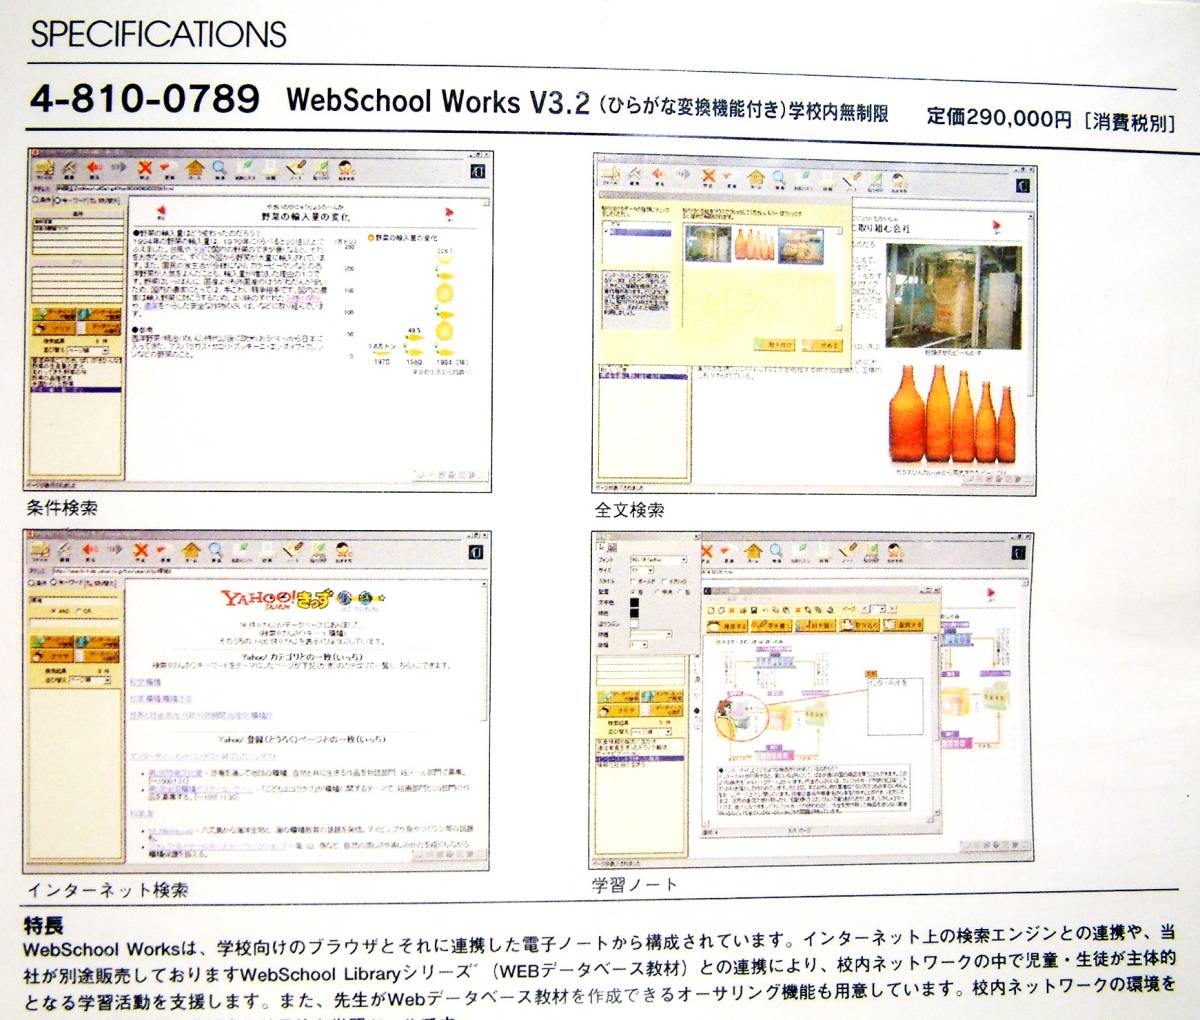 [3962]uchidaCAI soft WebSchool Works v3.2 ( common .. conversion with function ) school inside limitless new goods inside rice field . line UCHIDA web school Works 